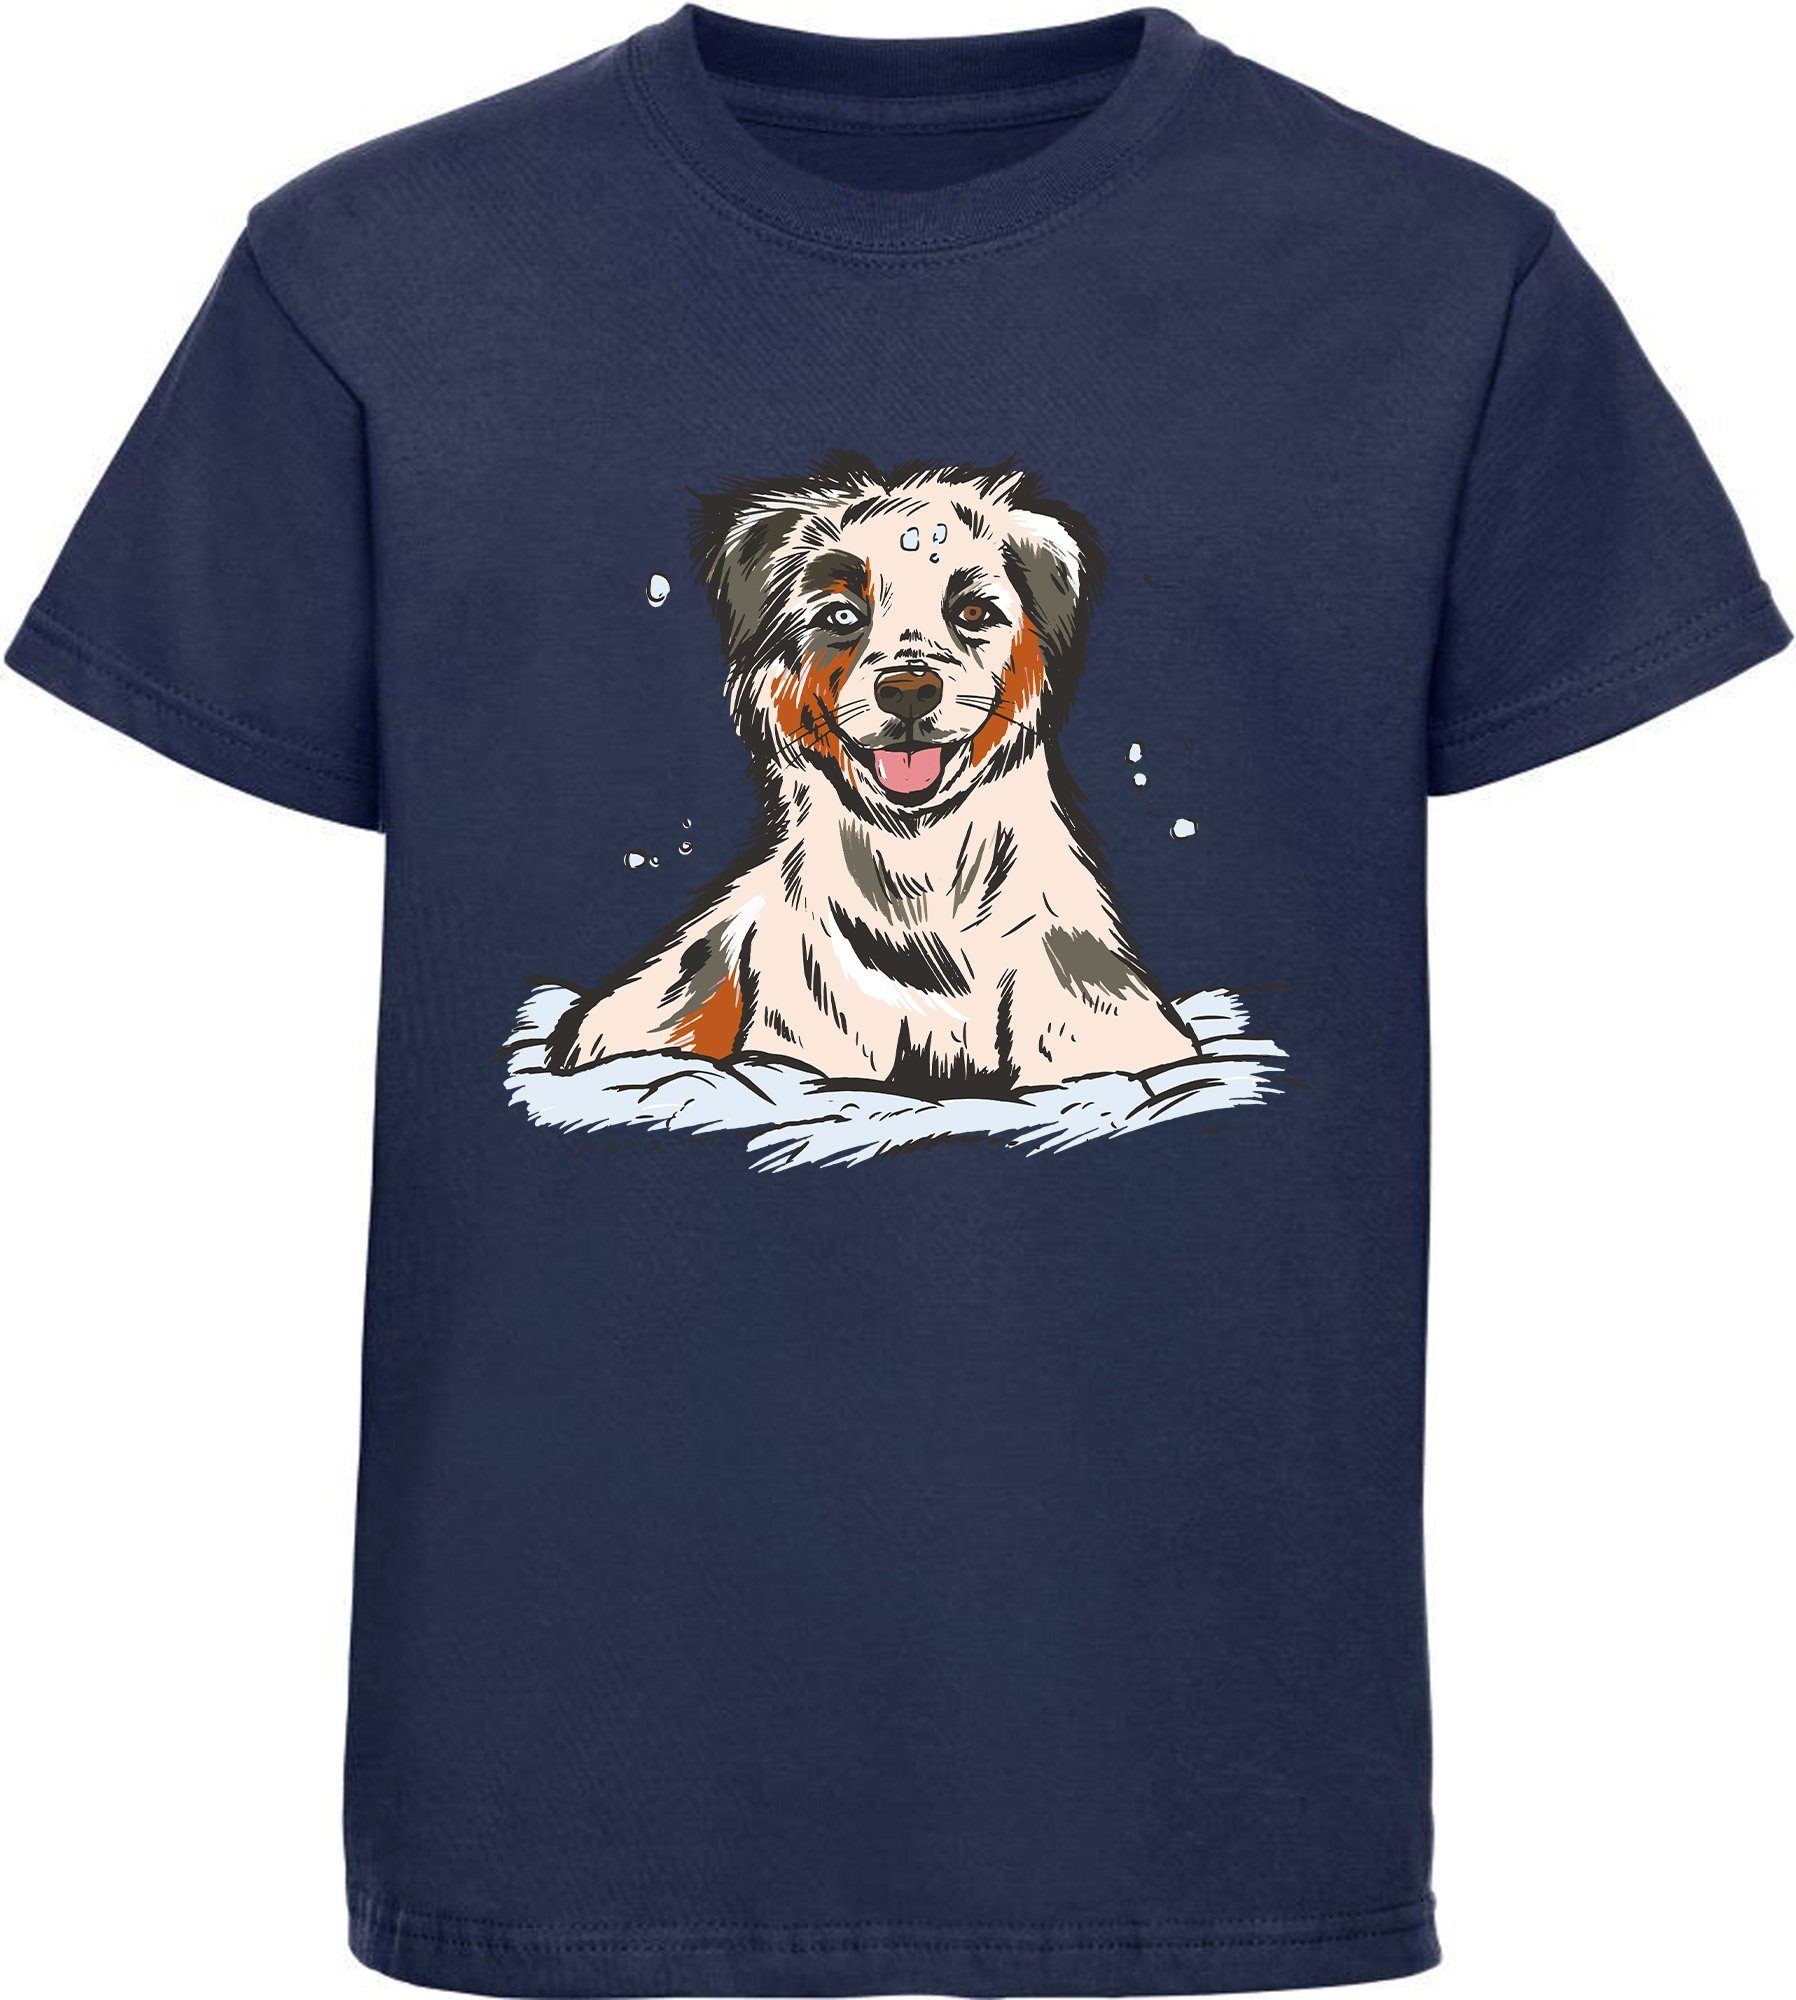 Print-Shirt mit Kinder Australian Shepherd navy Welpe und i216 Aufdruck, bedrucktes Jugend T-Shirt Baumwollshirt Hunde MyDesign24 blau